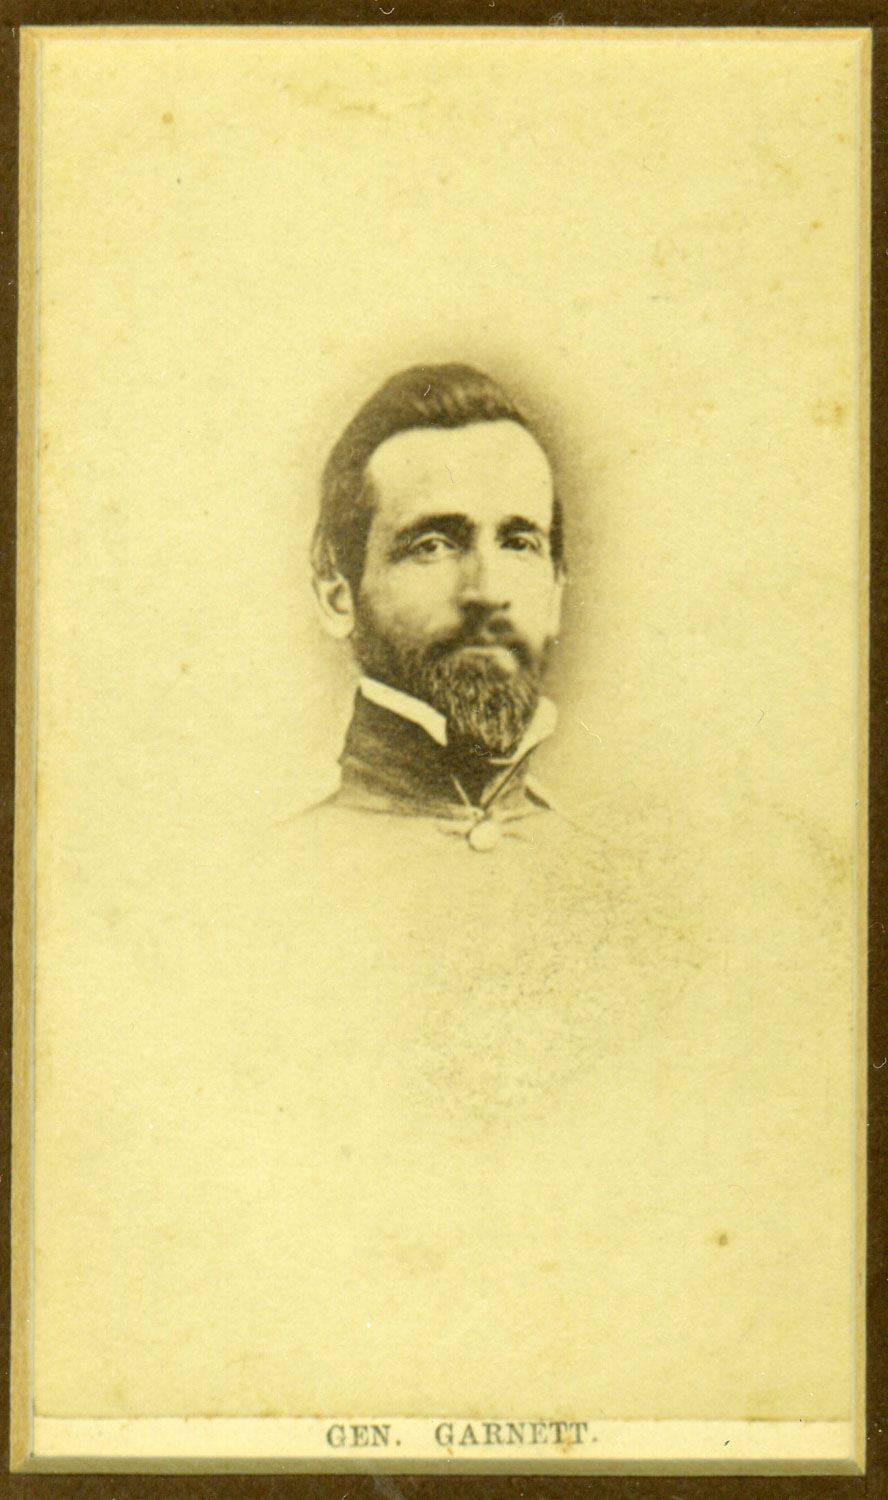 Brigadier General Richard Garnett